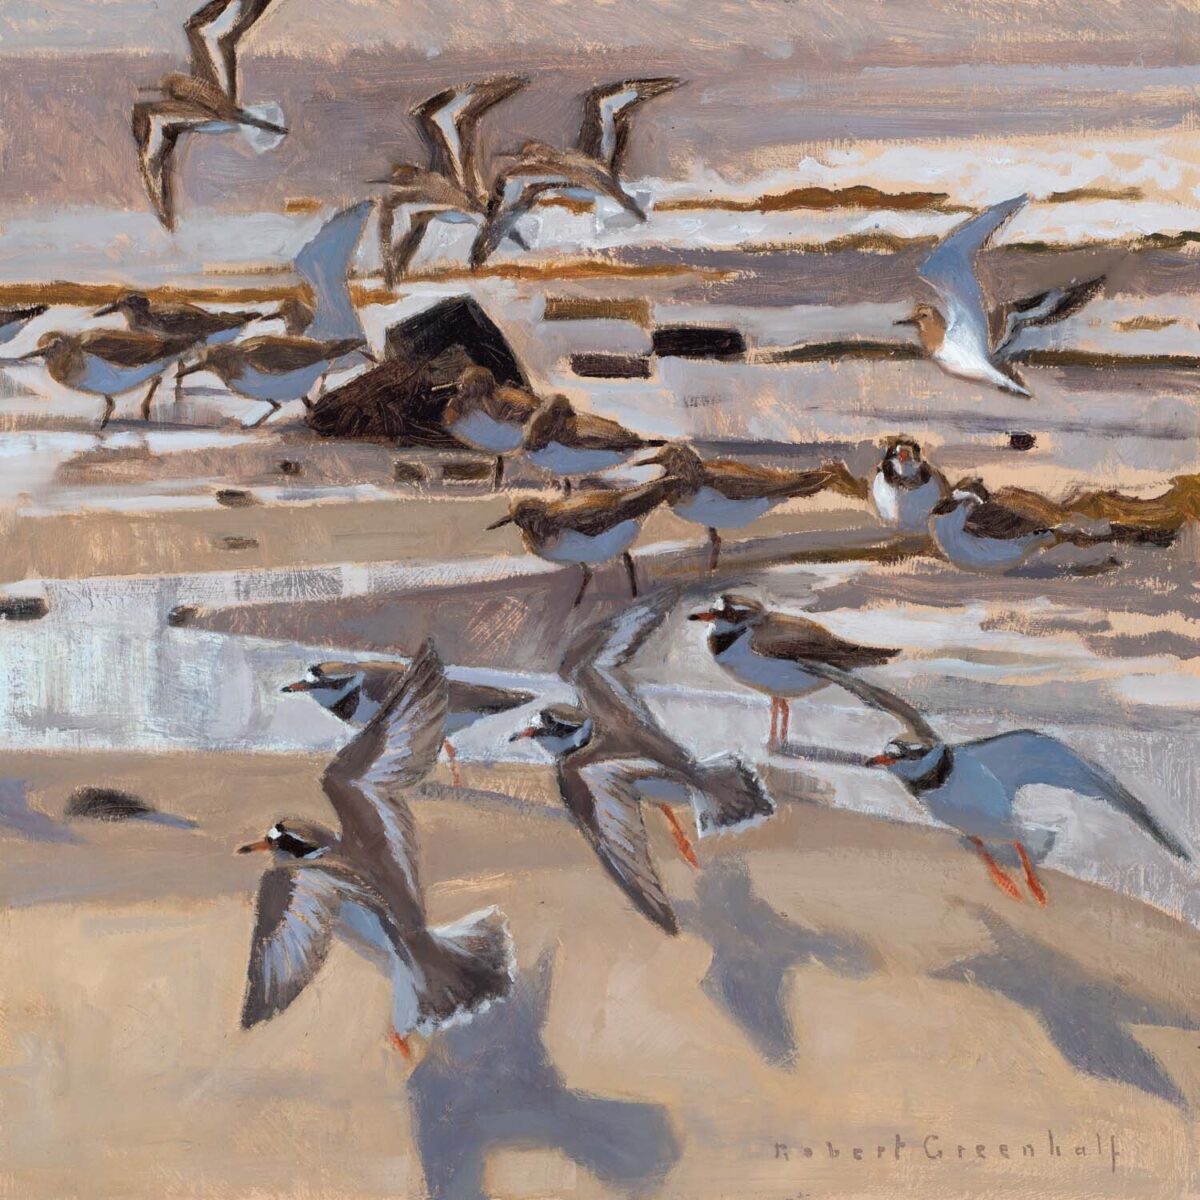 Artwork image titled: Ringed Plovers and Sanderlings